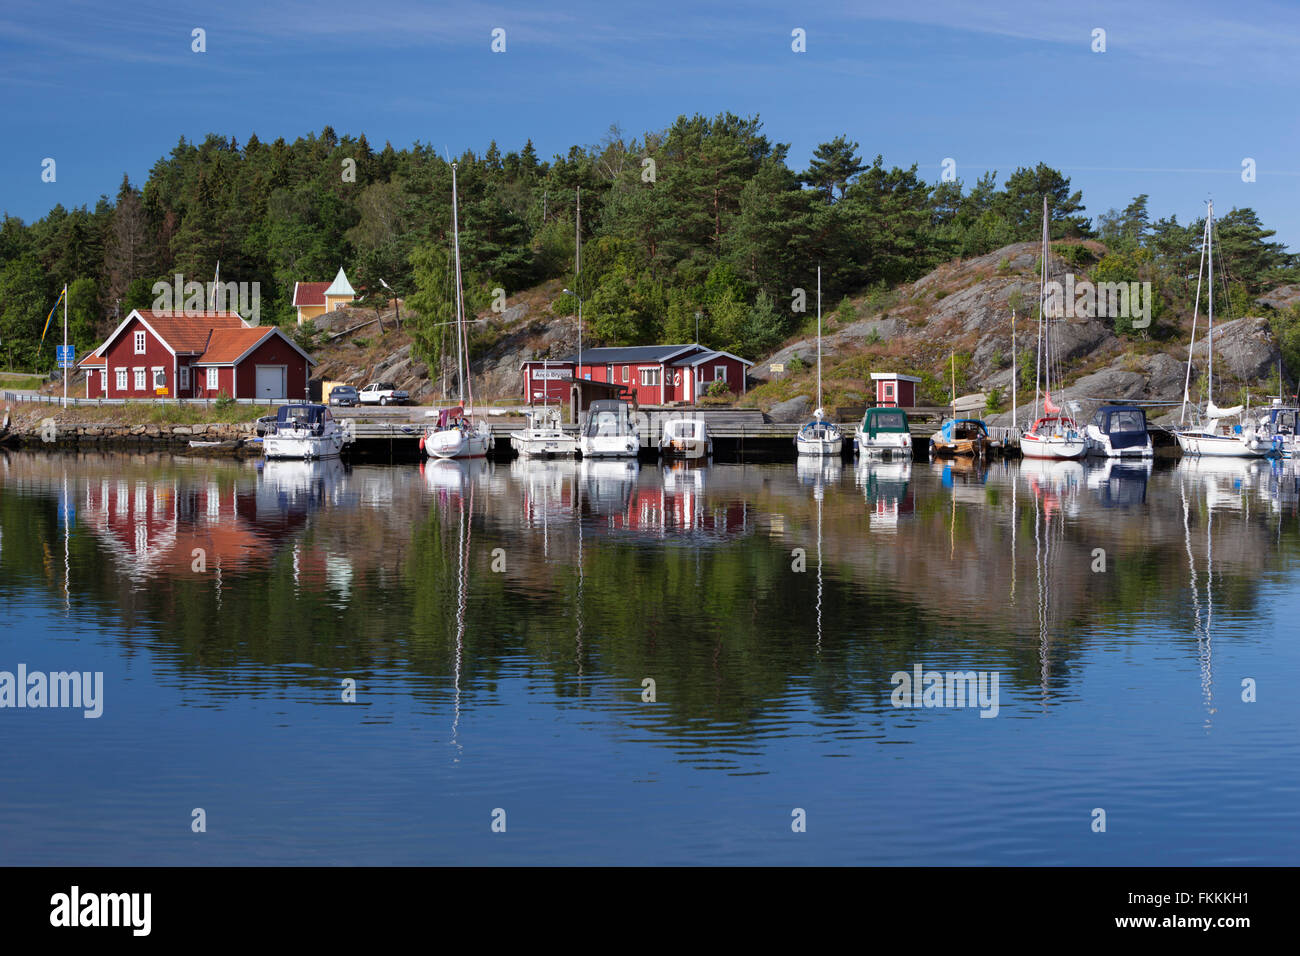 View of village, Ängön, Flatön island, Orust Kommun, Bohuslän Coast, Southwest Sweden, Sweden, Scandinavia, Europe Stock Photo